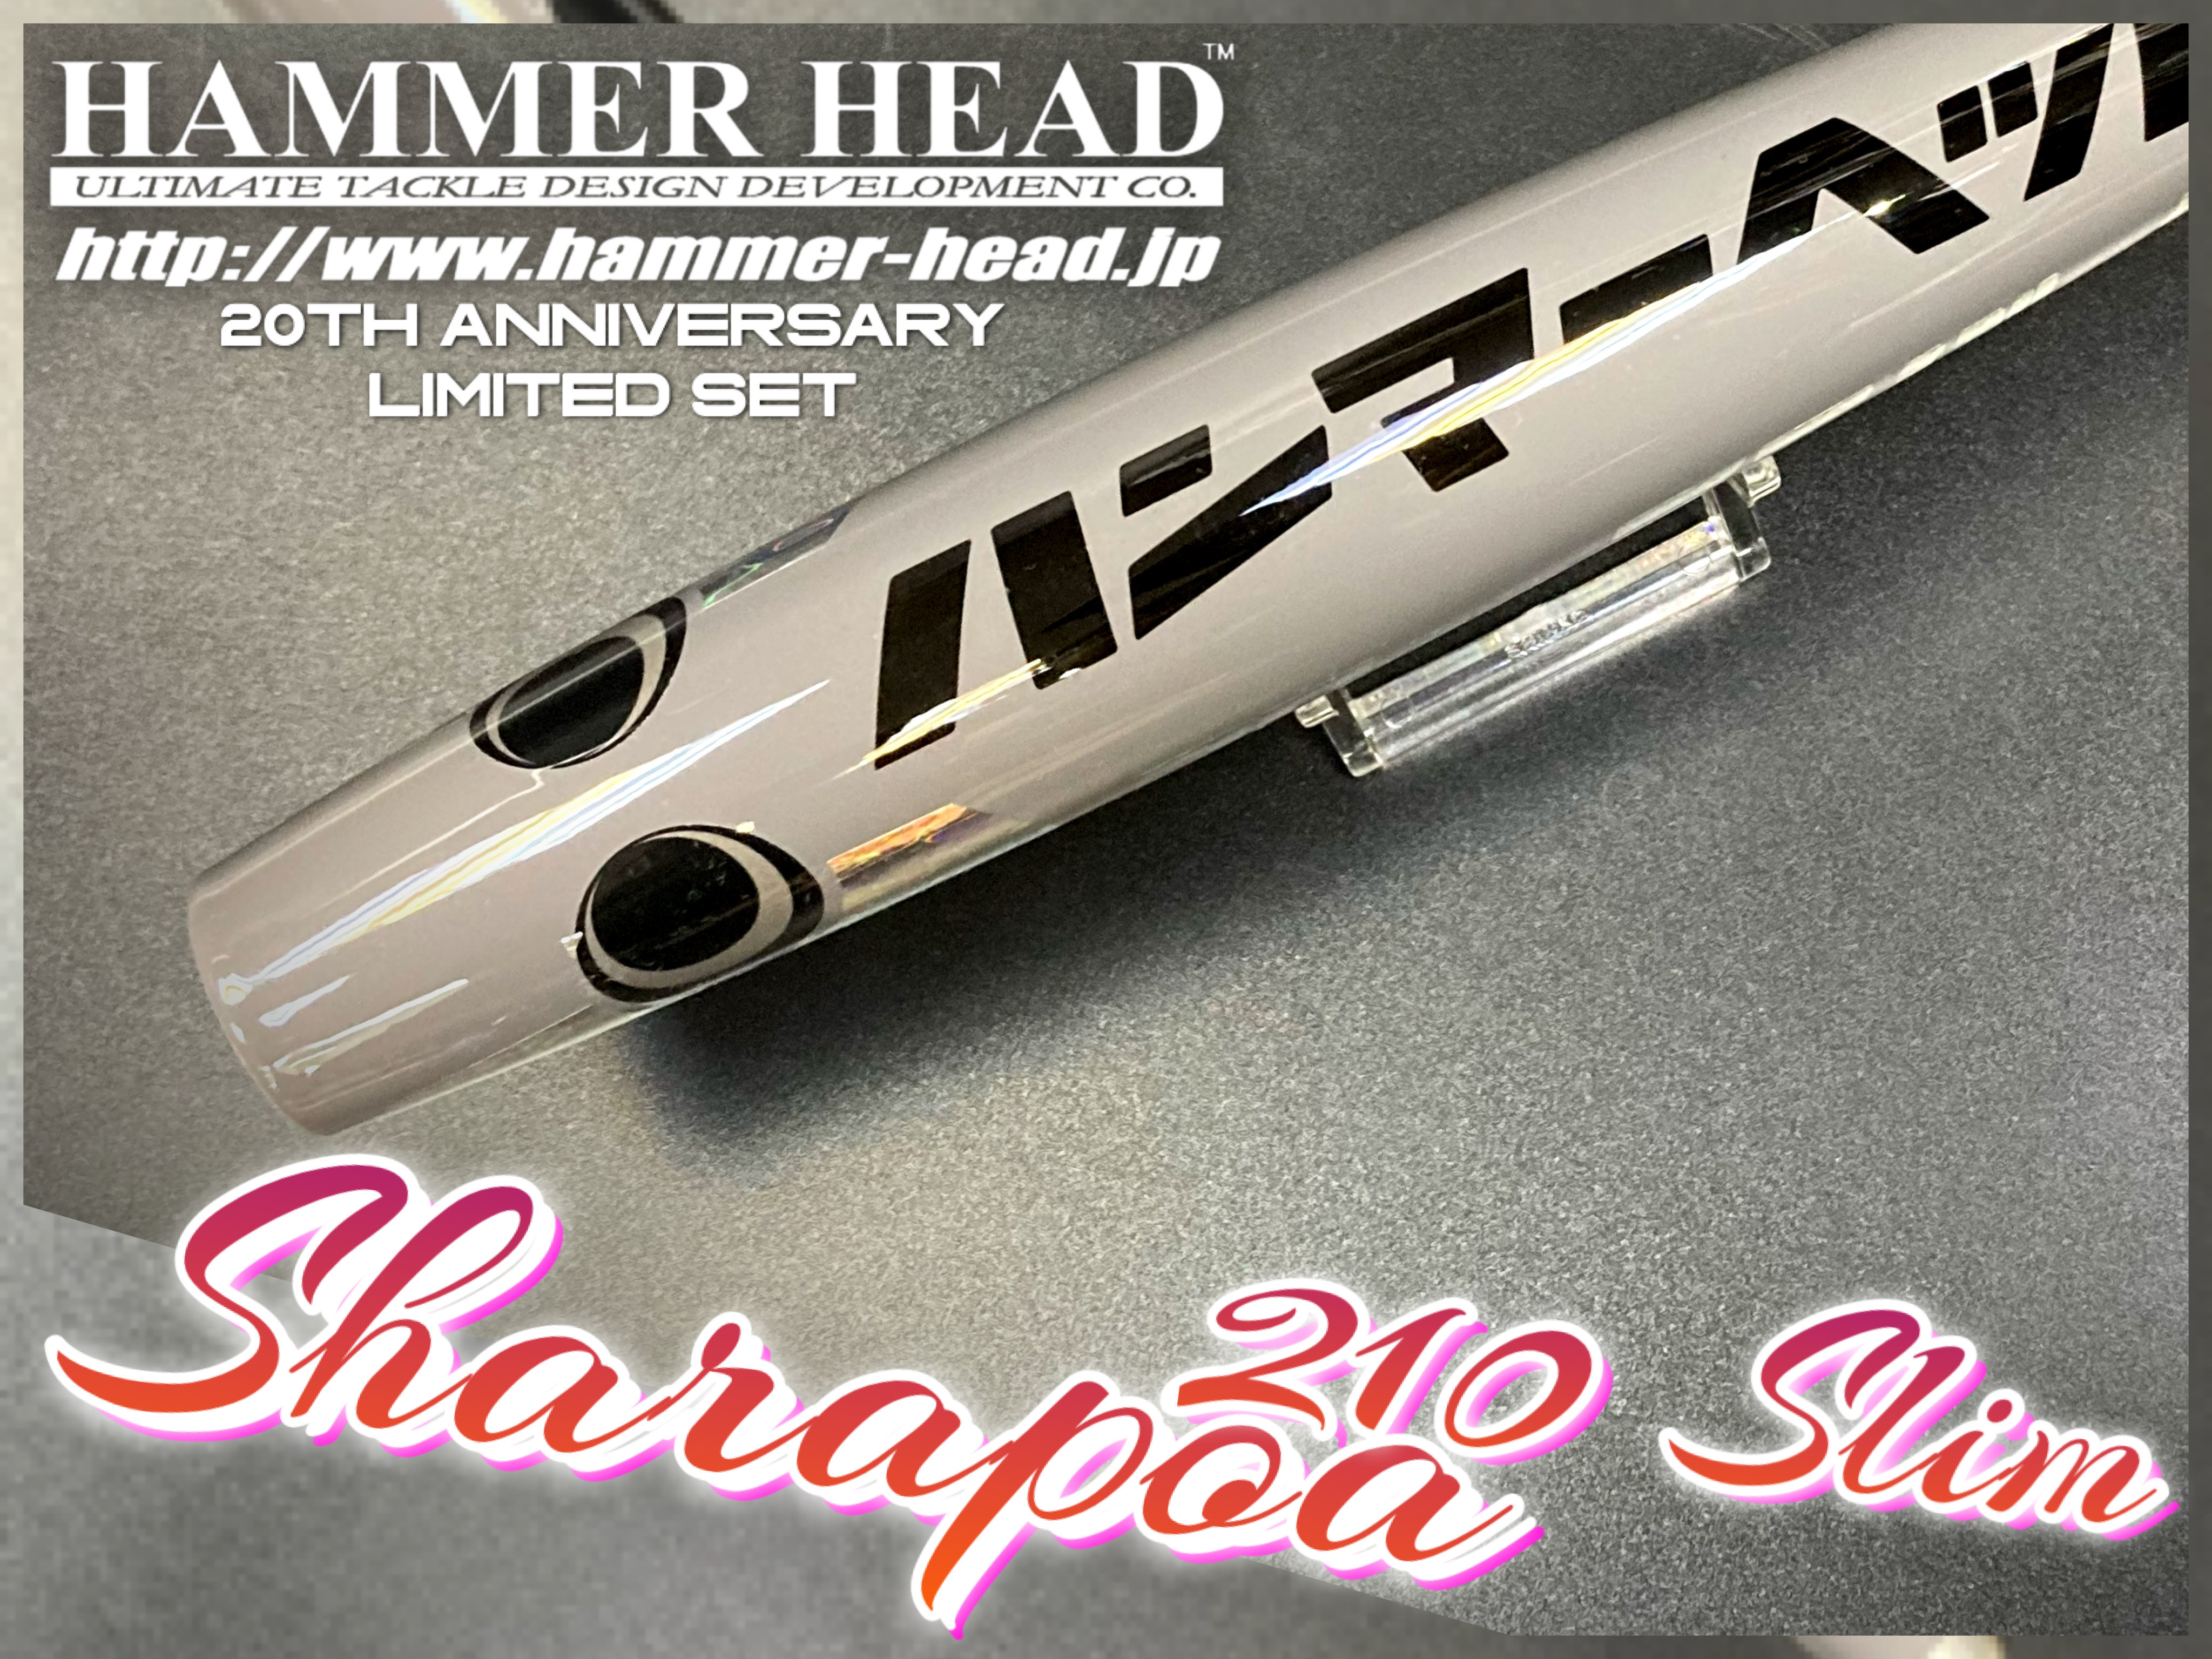 HAMMER-HEAD 20th Anniversary Limited Set Sharapoa 210 S